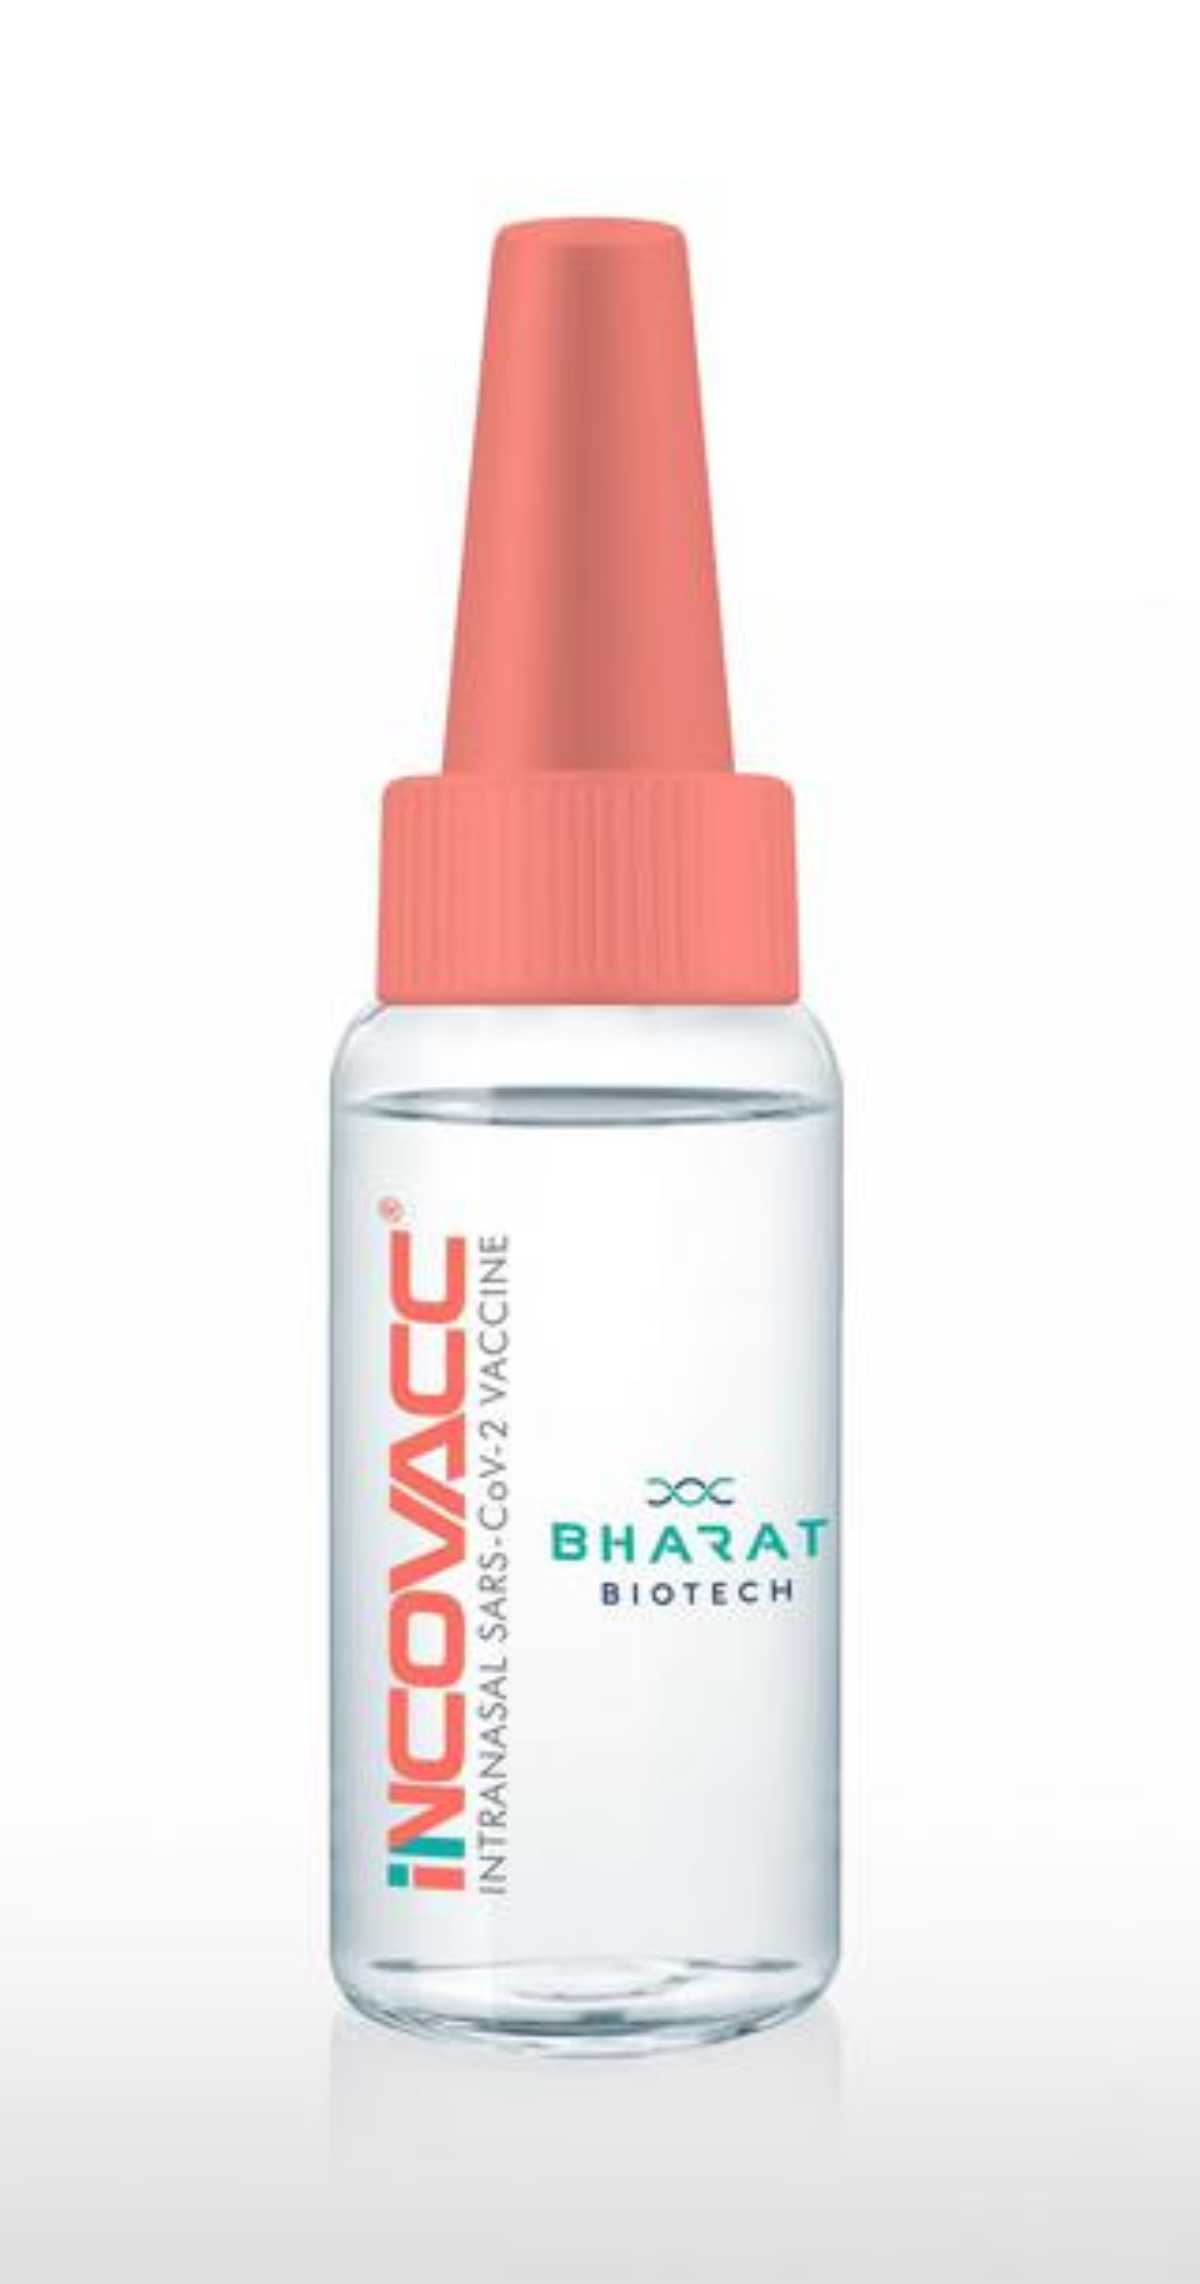 iNCOVACC vacuna nasal india